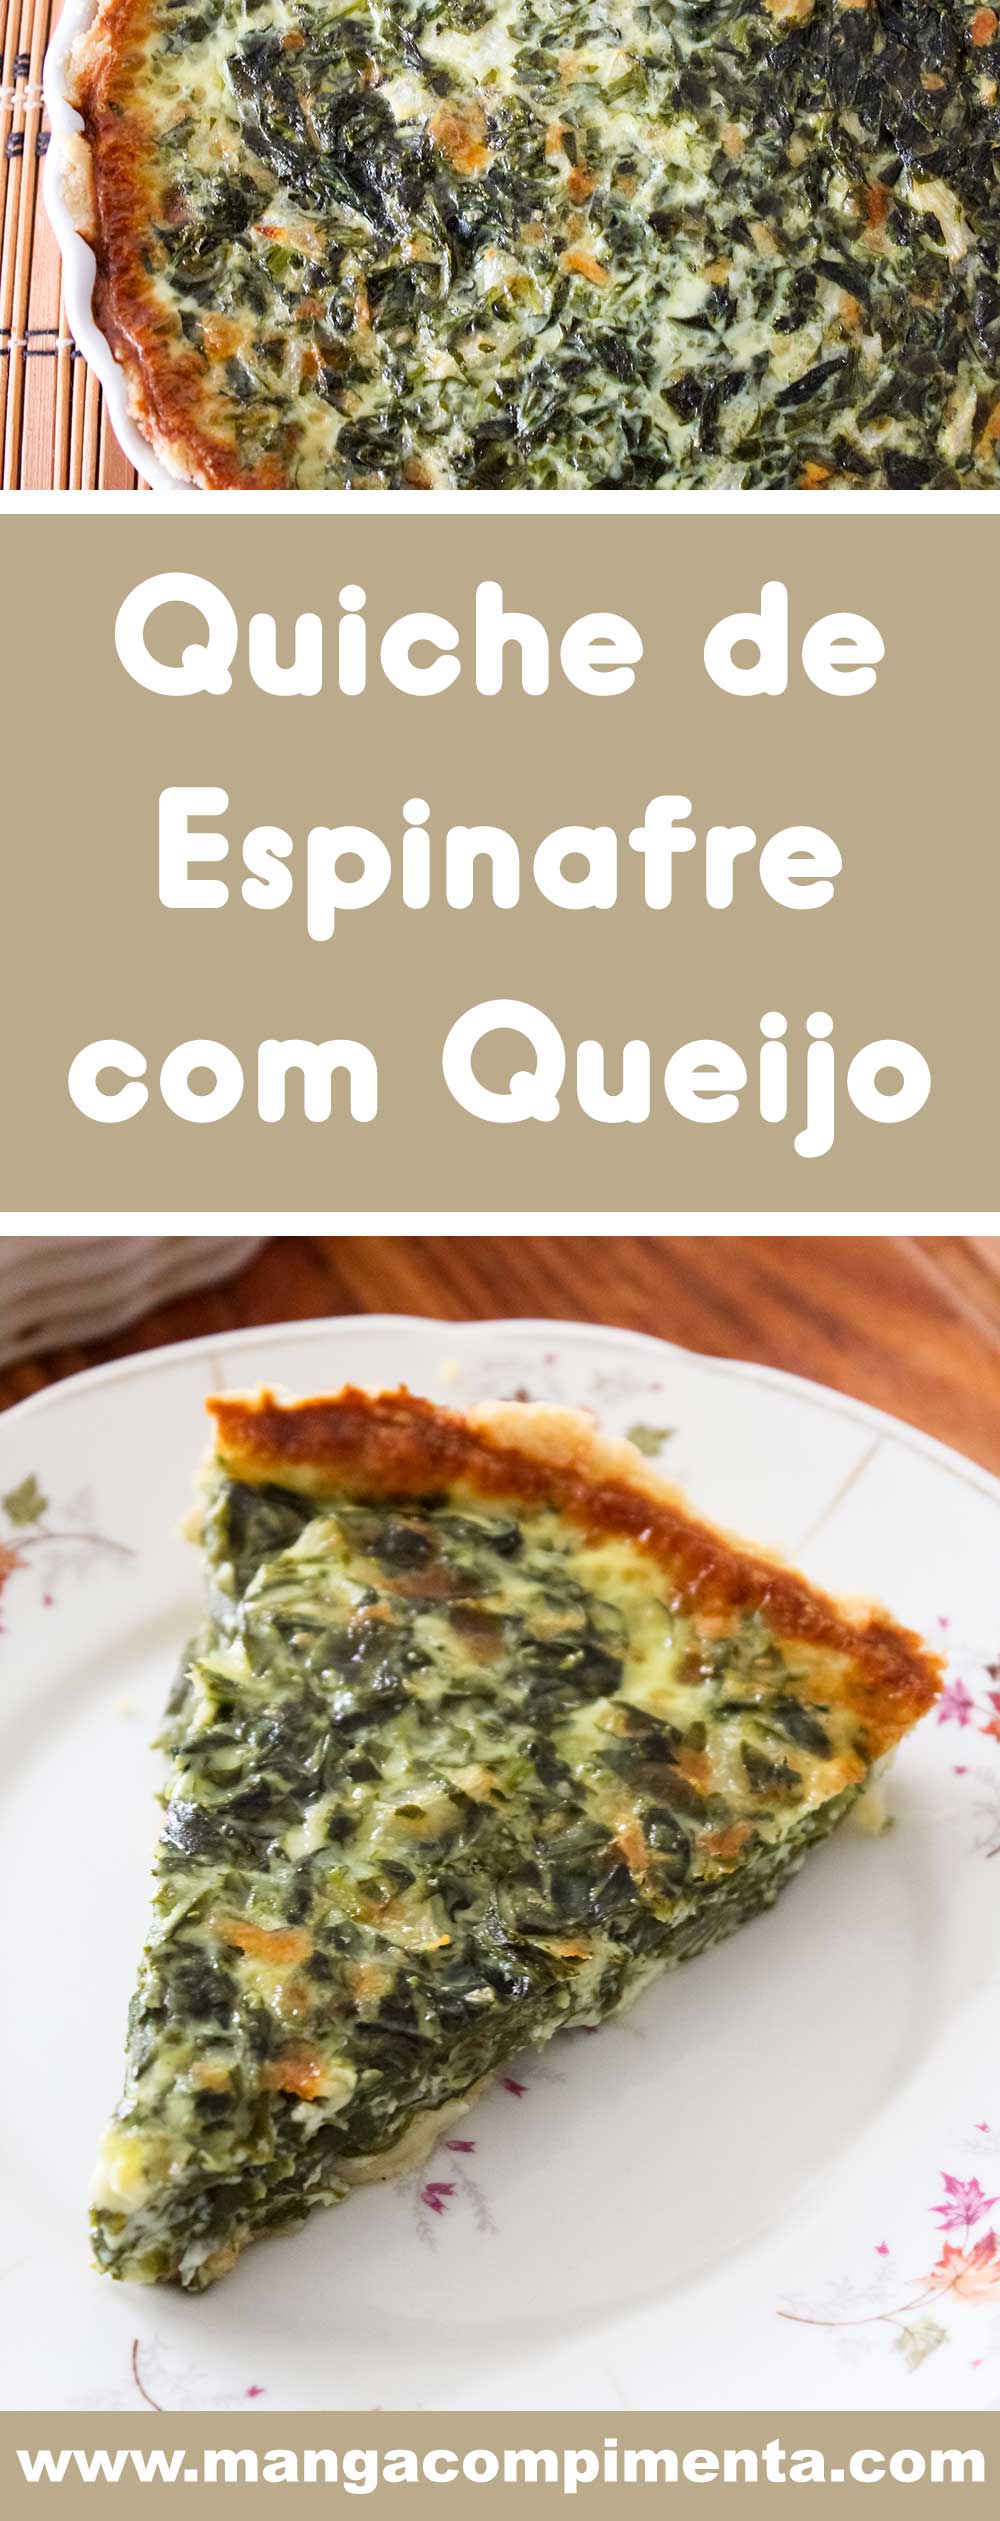 Receita de Quiche de Espinafre com Queijo - prepare um prato delicioso para as datas especiais.